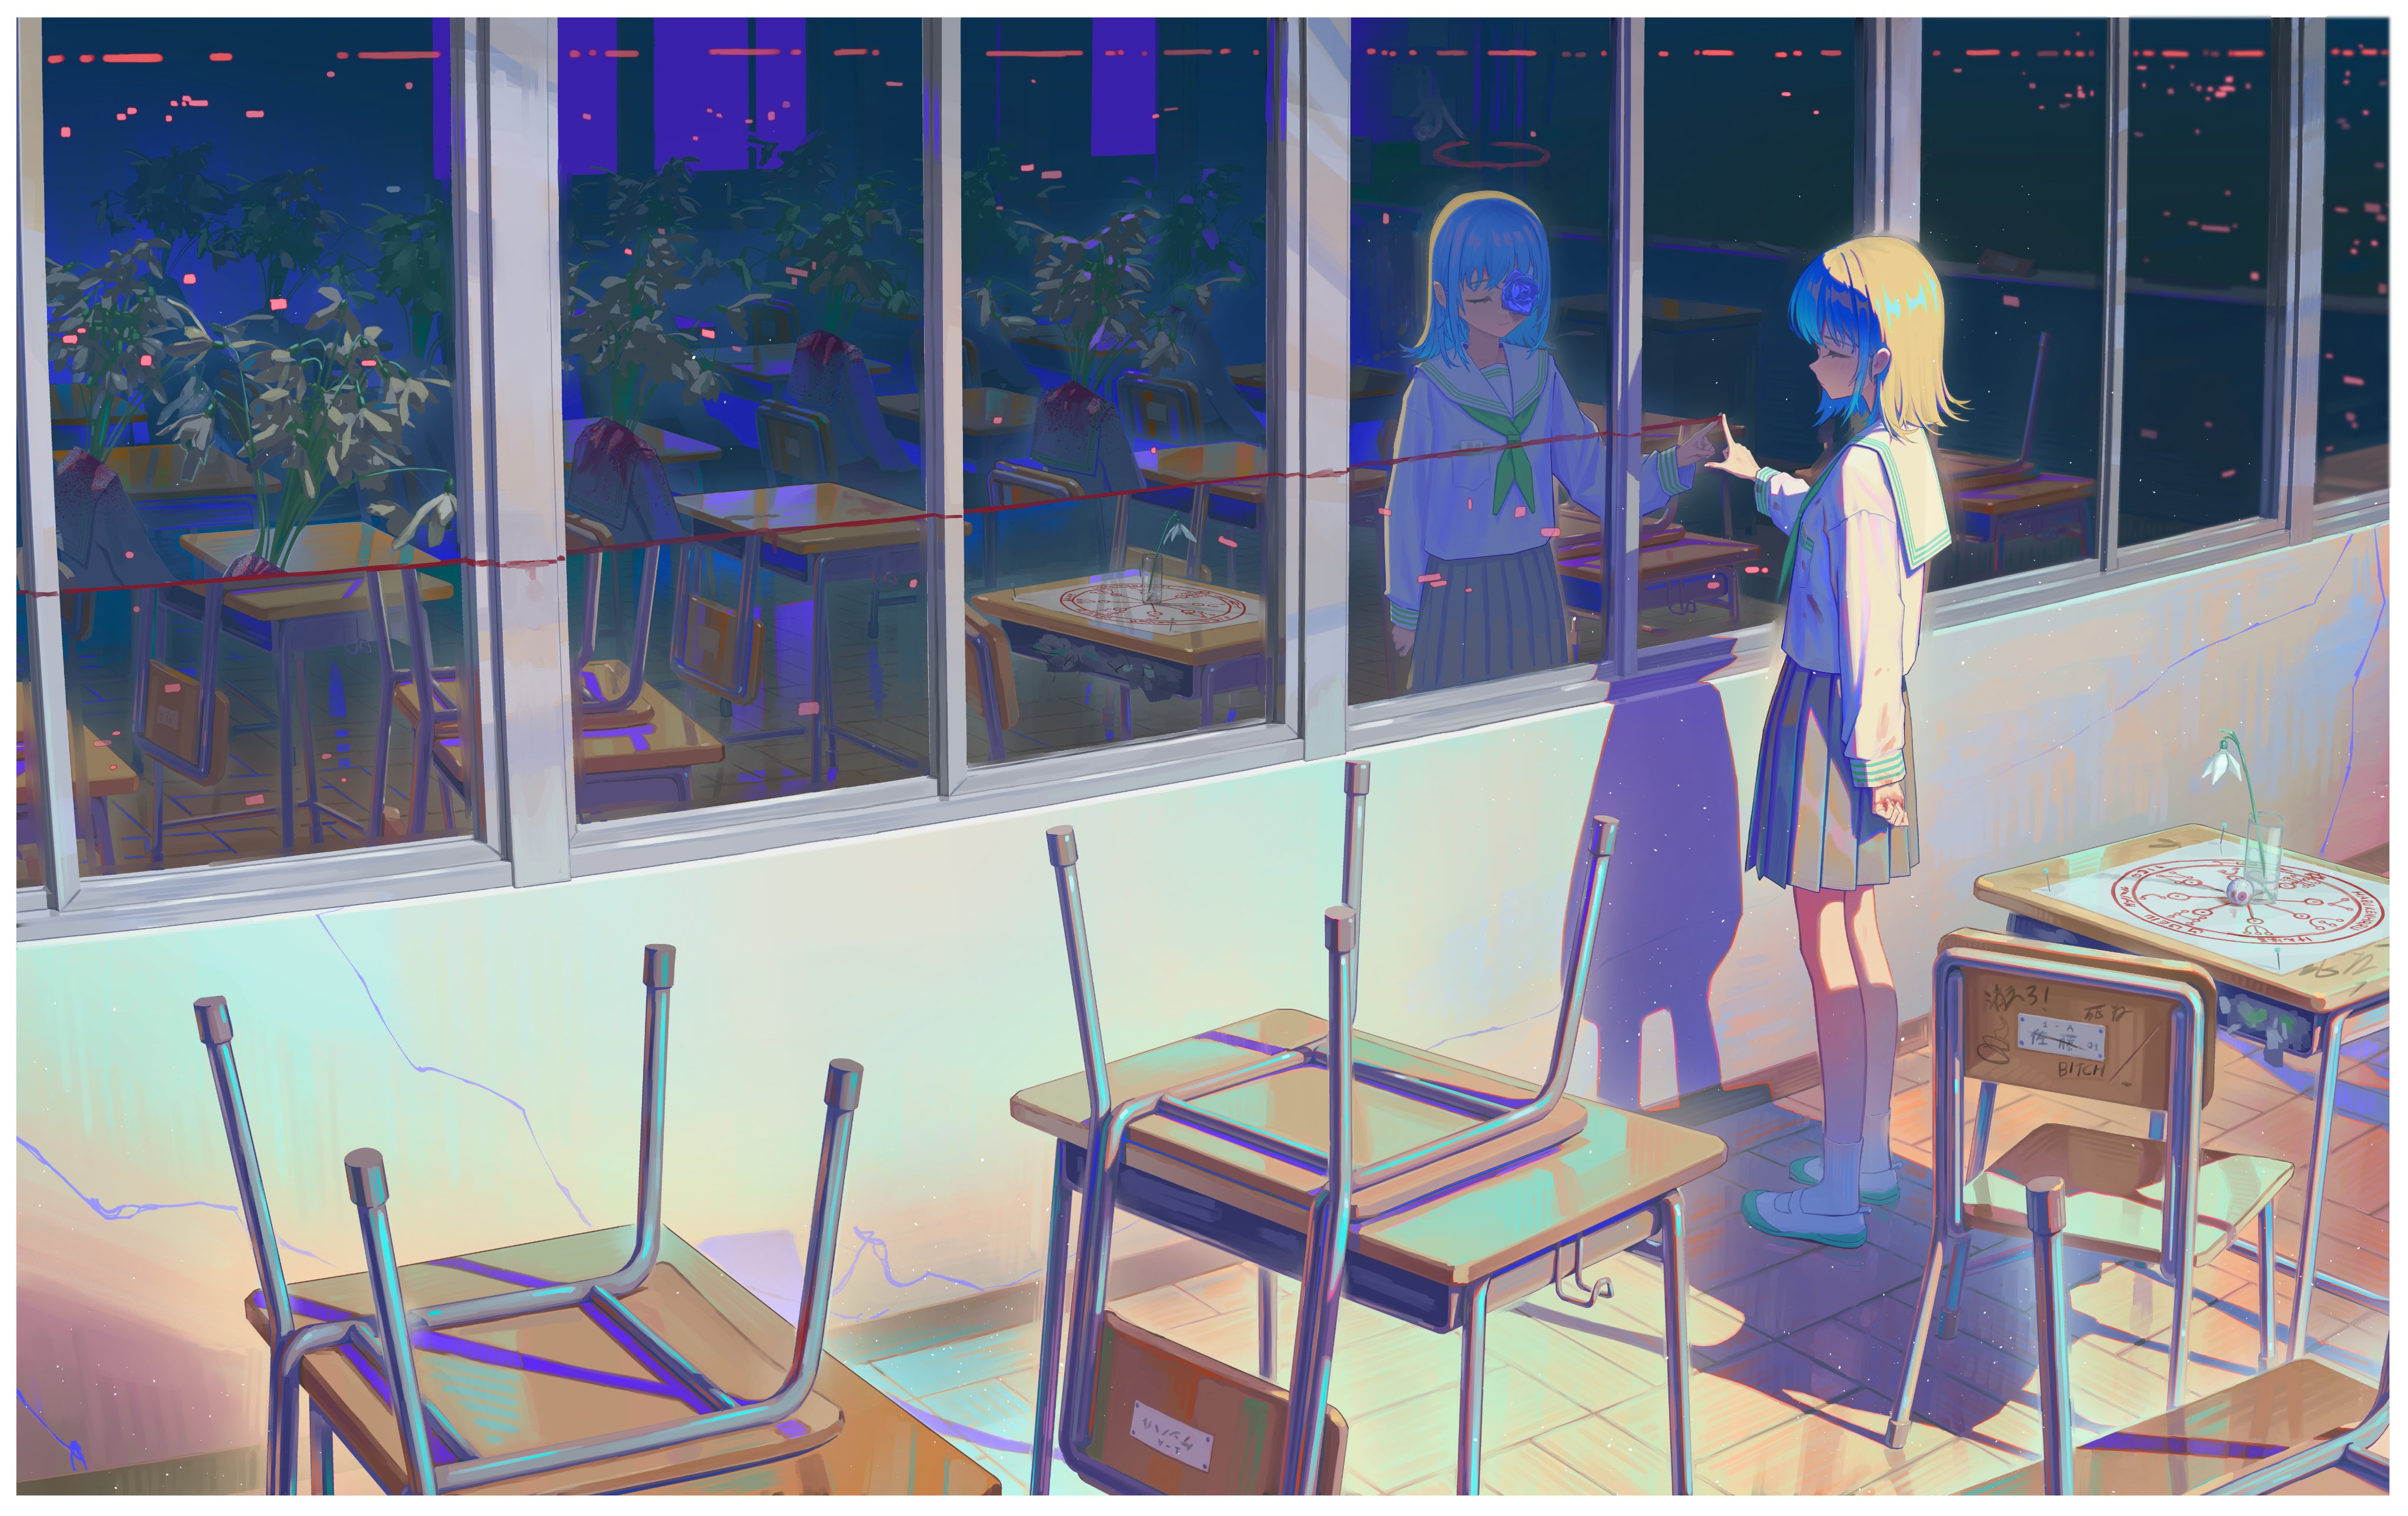 Anime Girls Artwork Schoolgirl School Uniform Reflection Classroom Window Blue Rose 4096x2579